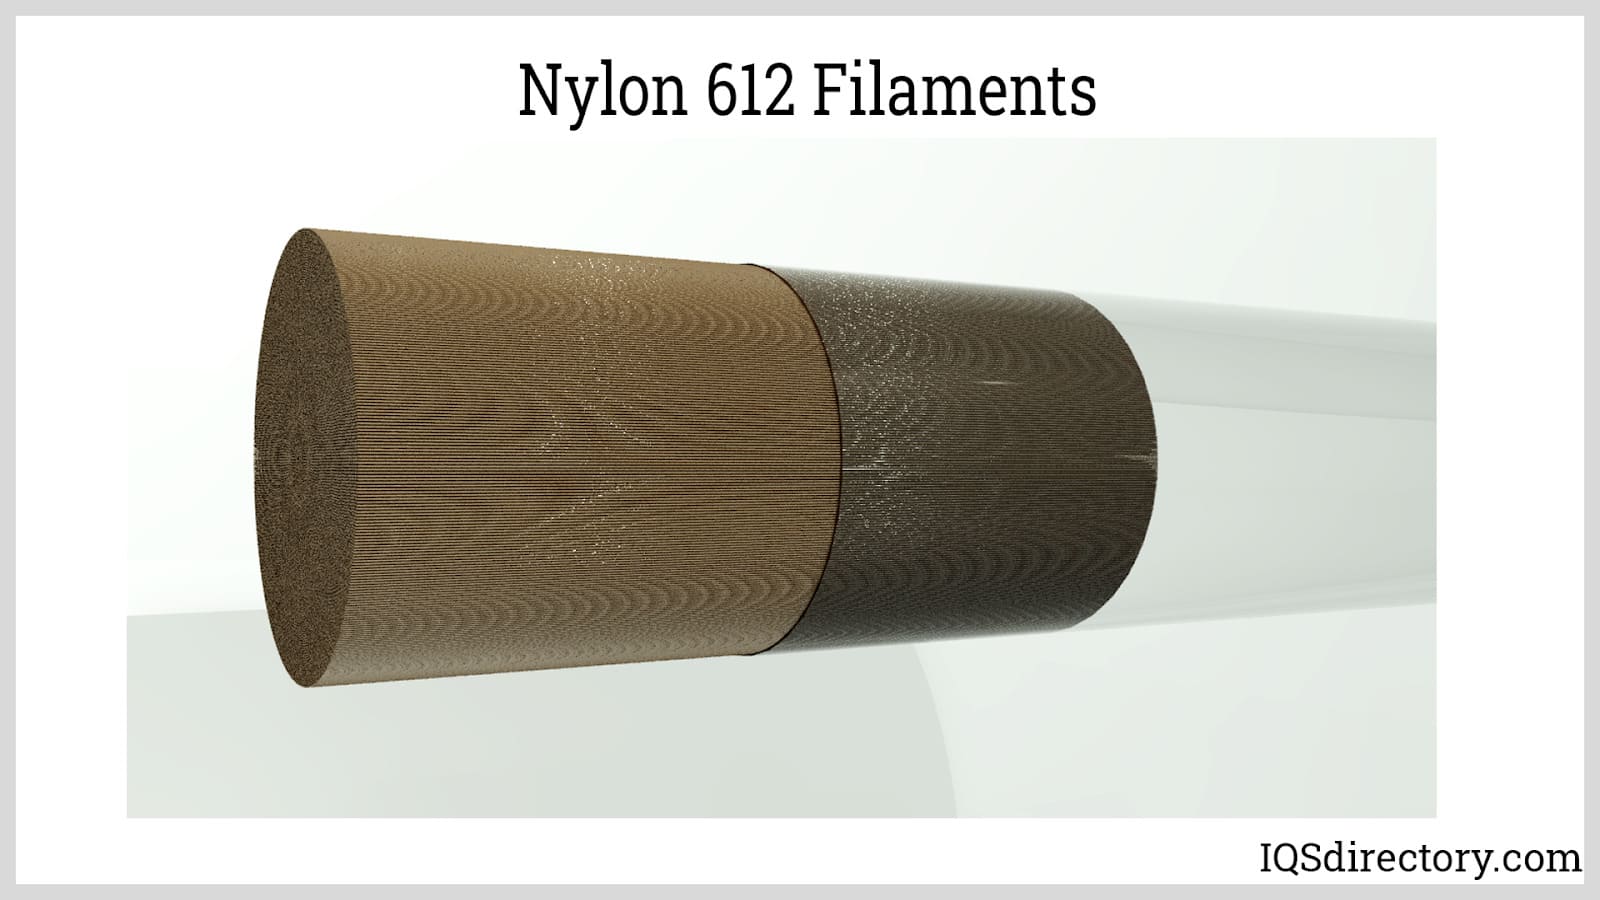 Nylon 612 Filaments